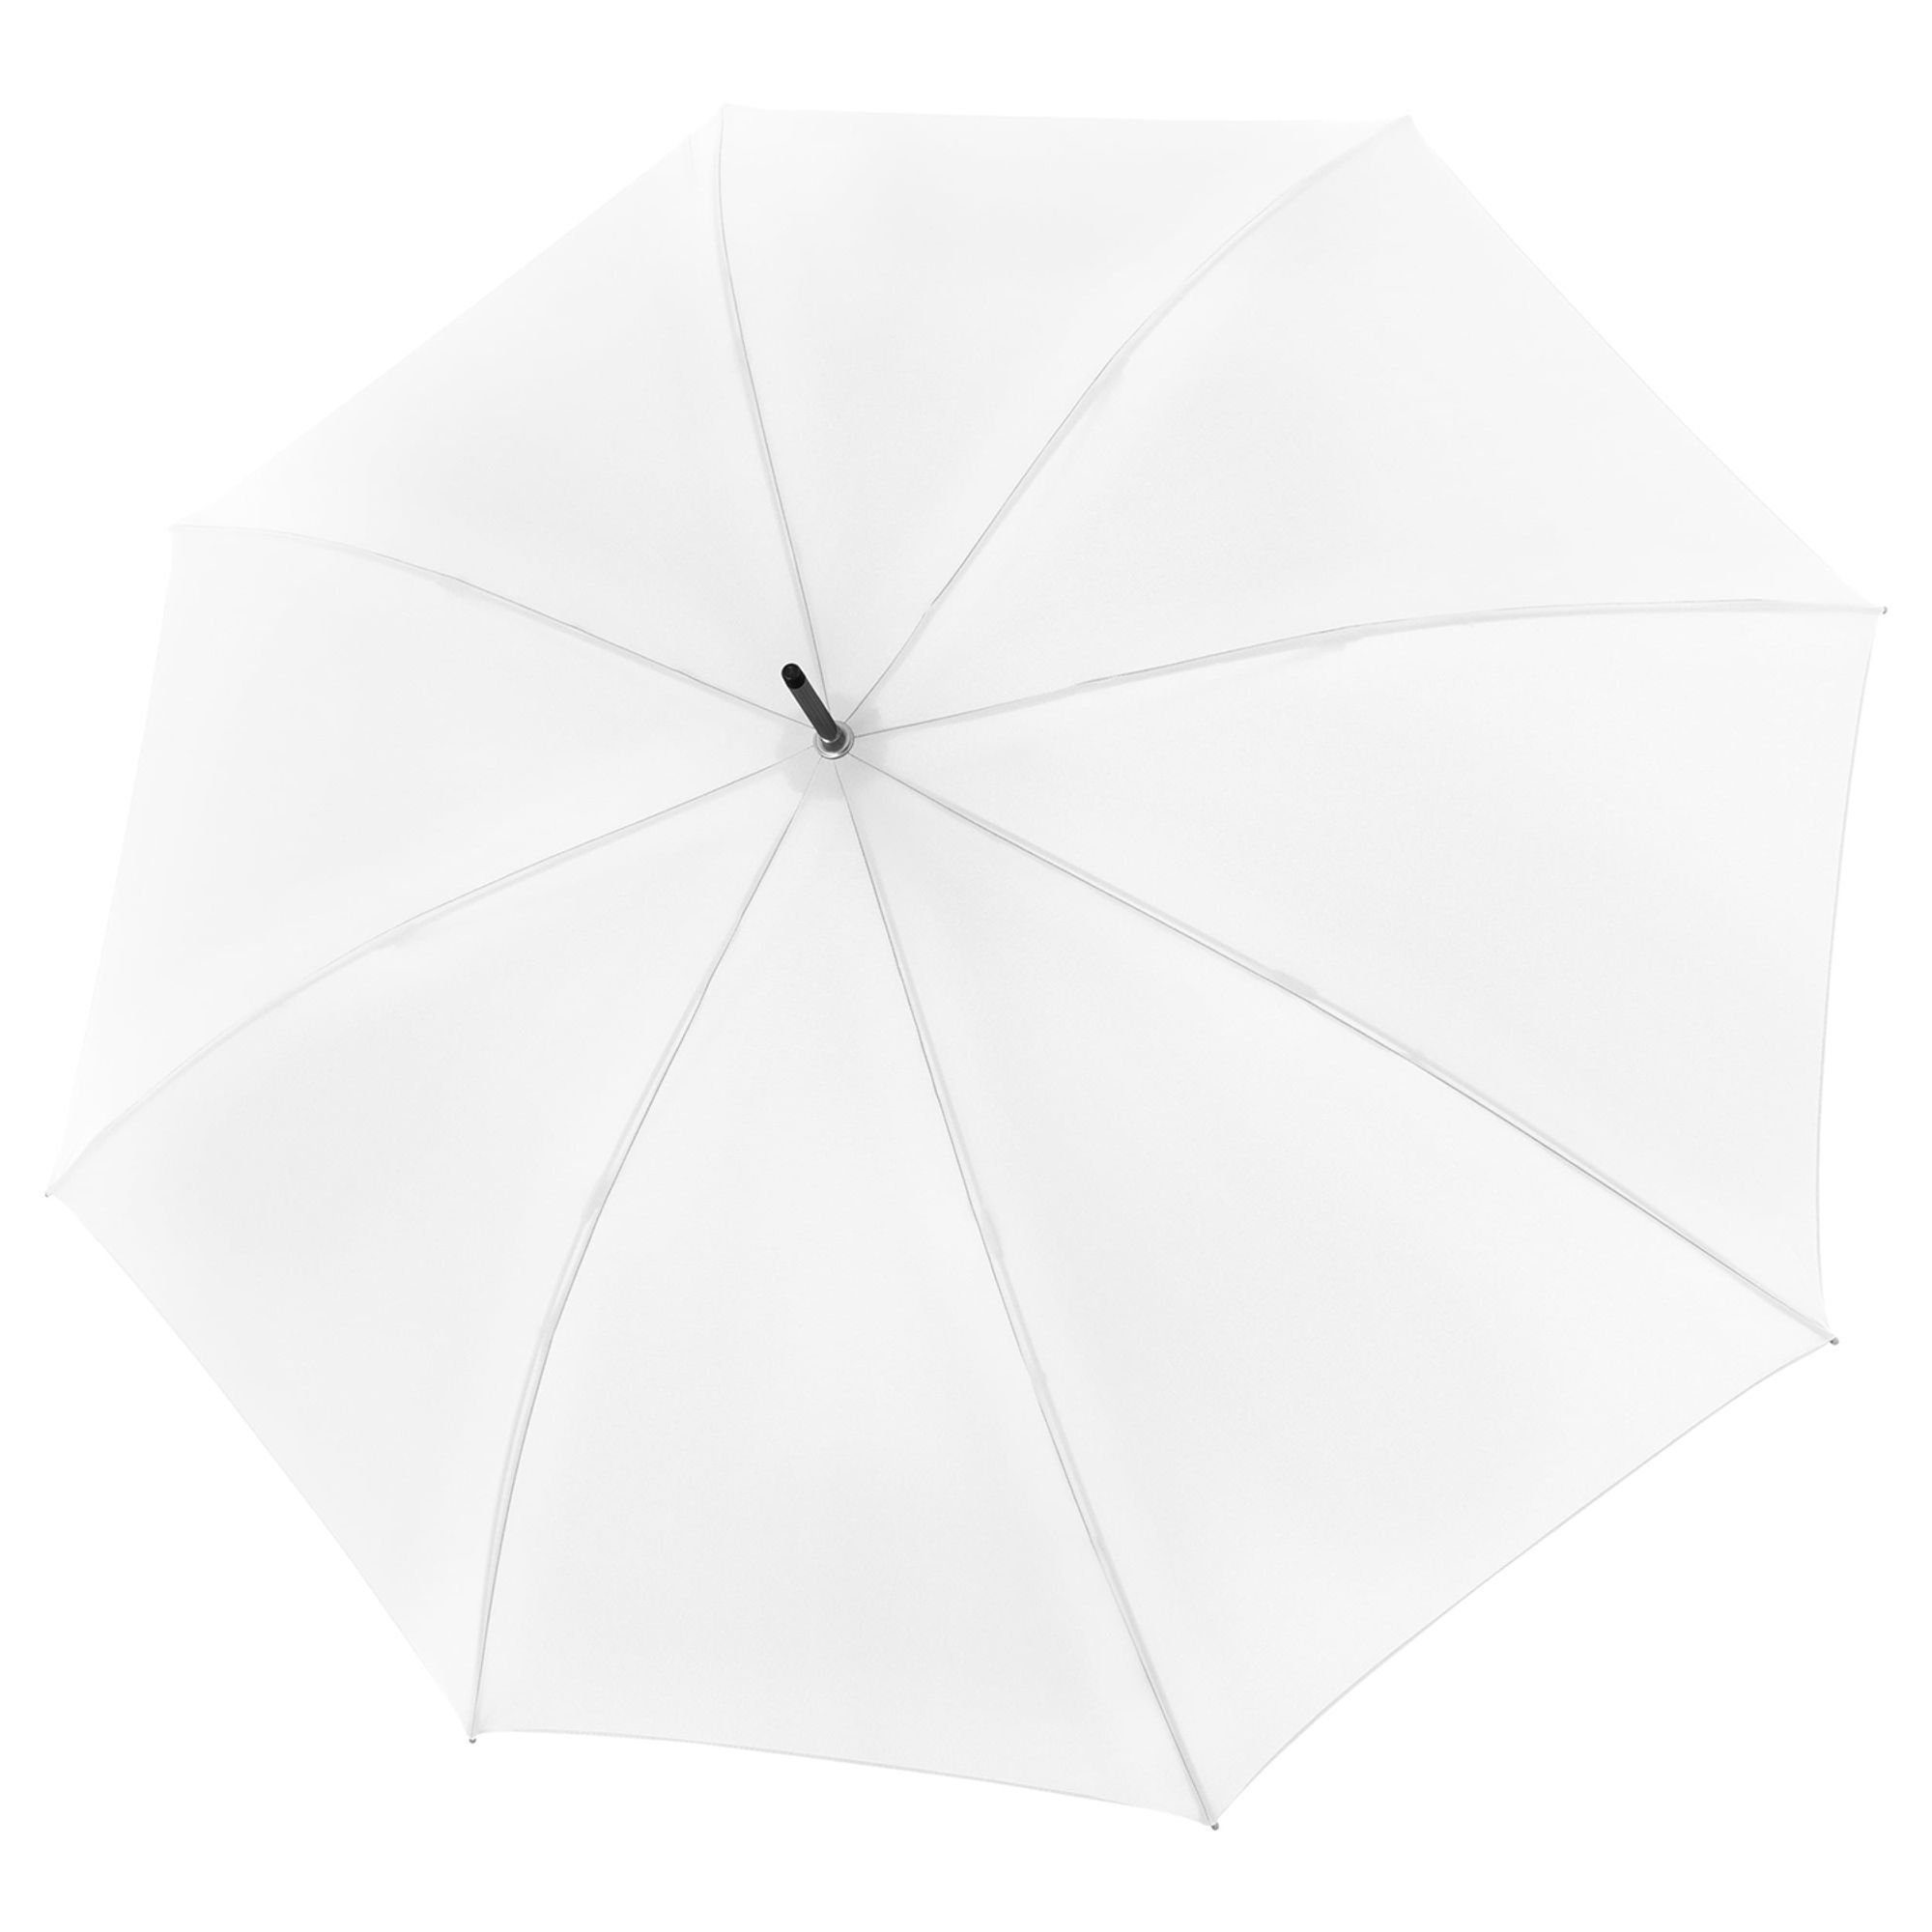 Stockregenschirm Mia doppler® white